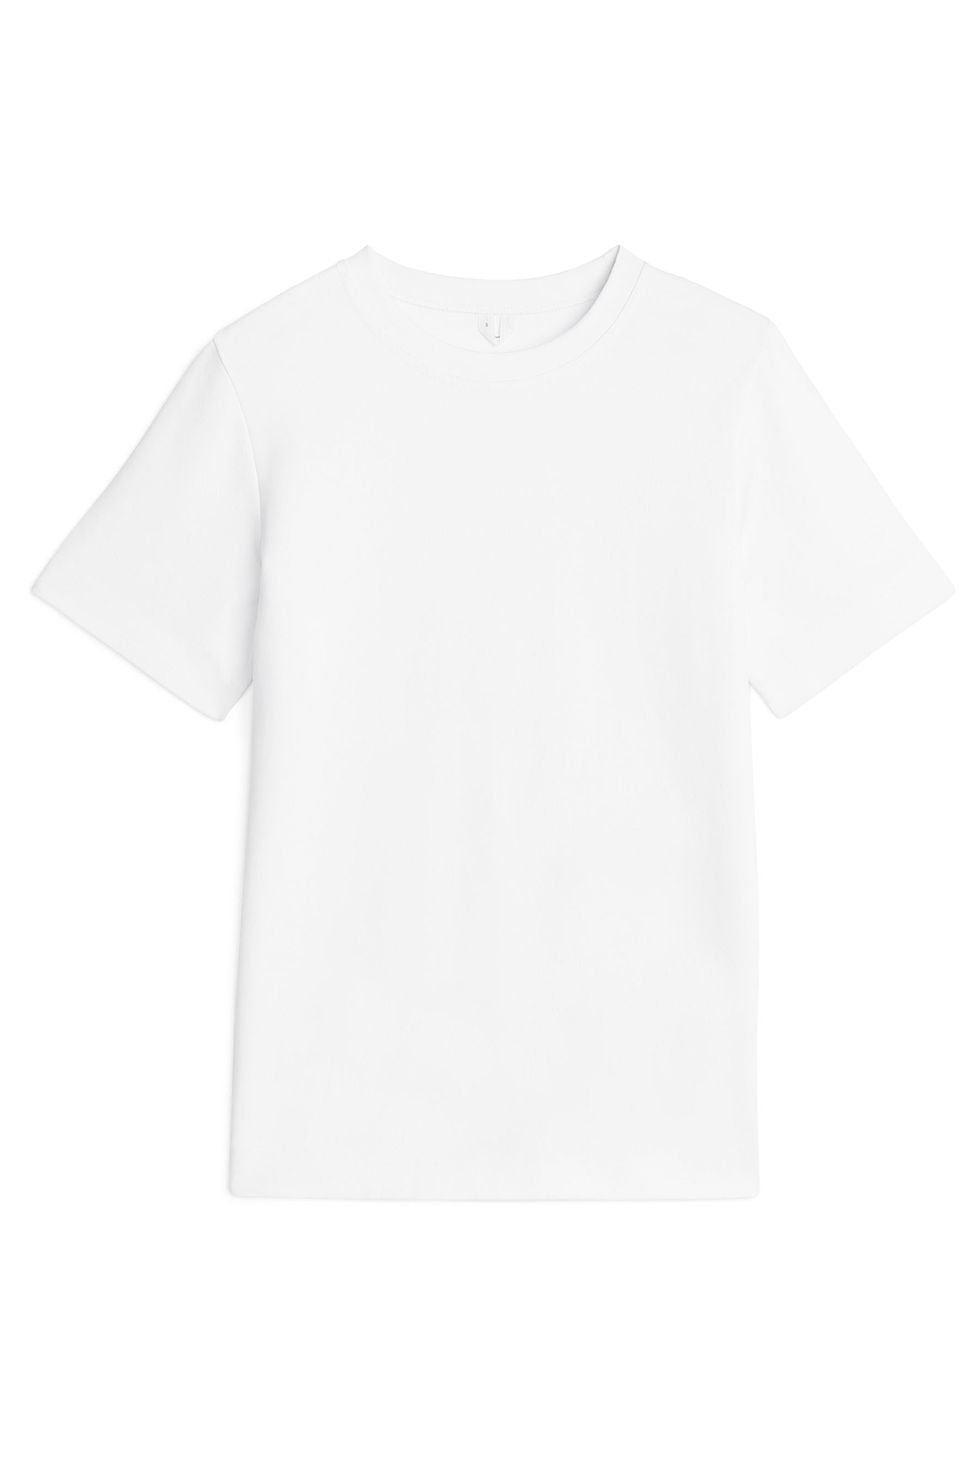 Best white T-shirts for women UK: 15 